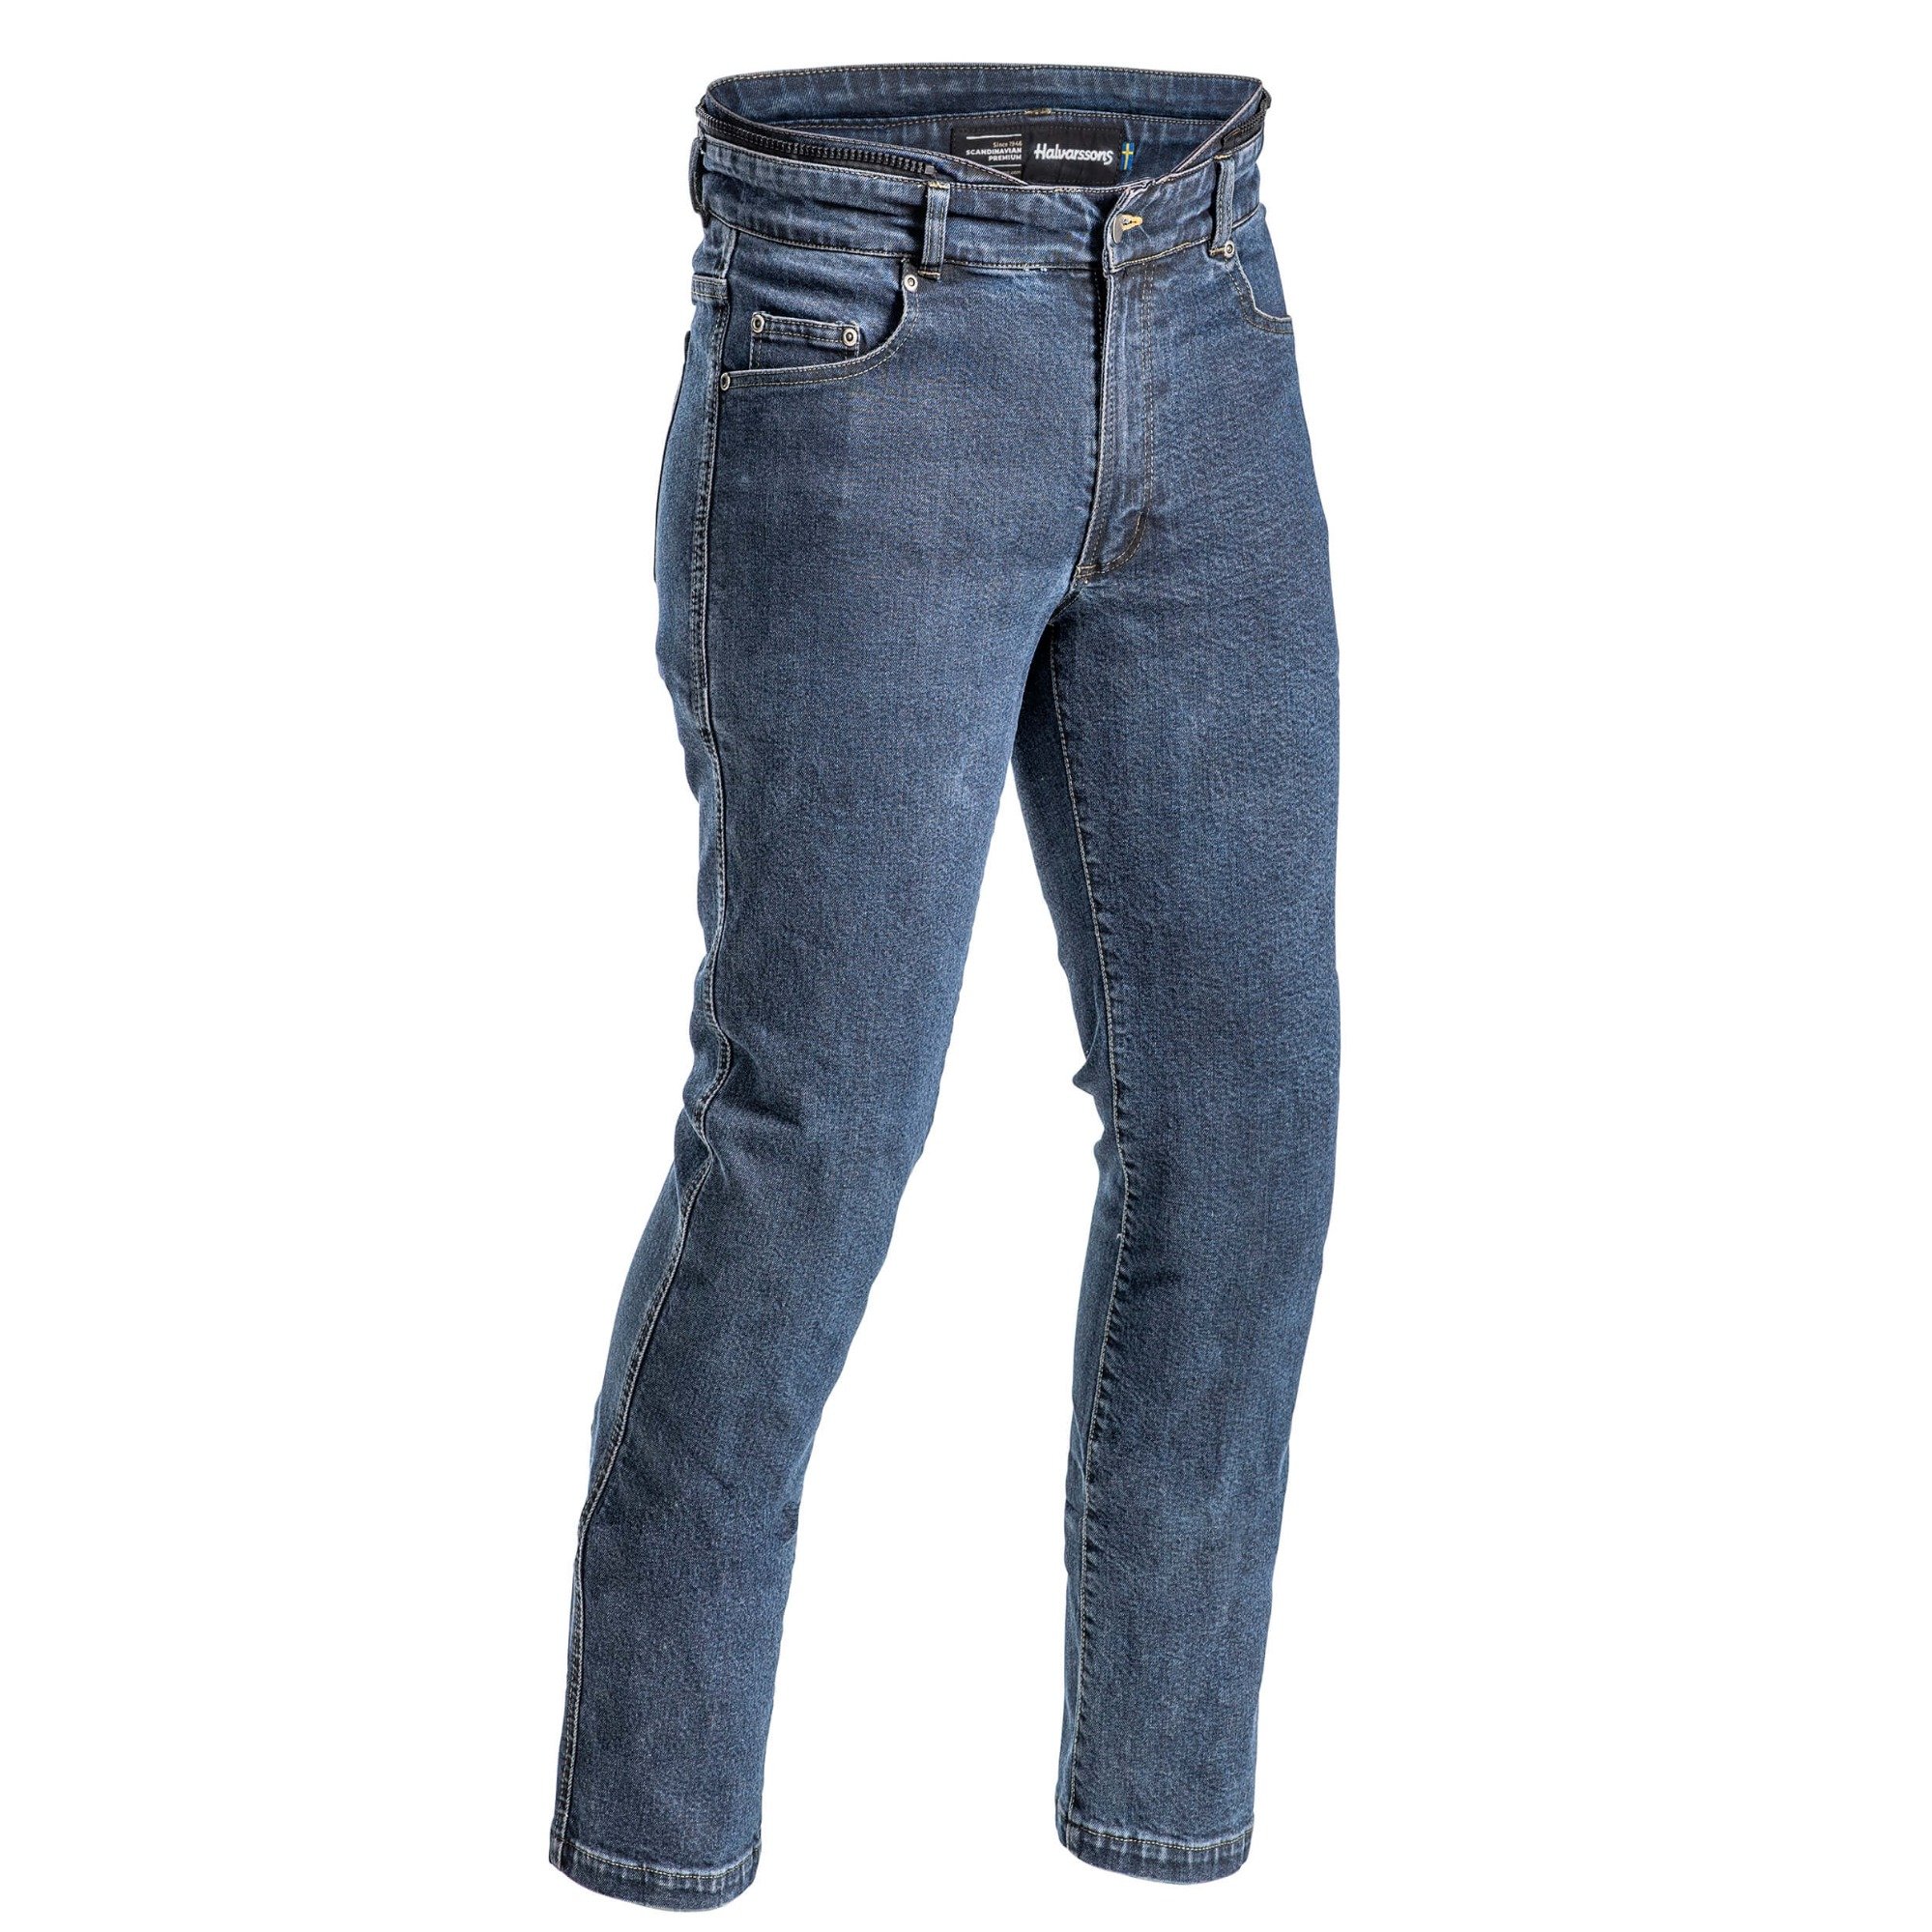 Image of Halvarssons Jeans Rogen Blue Short Size 48 ID 6438235239027